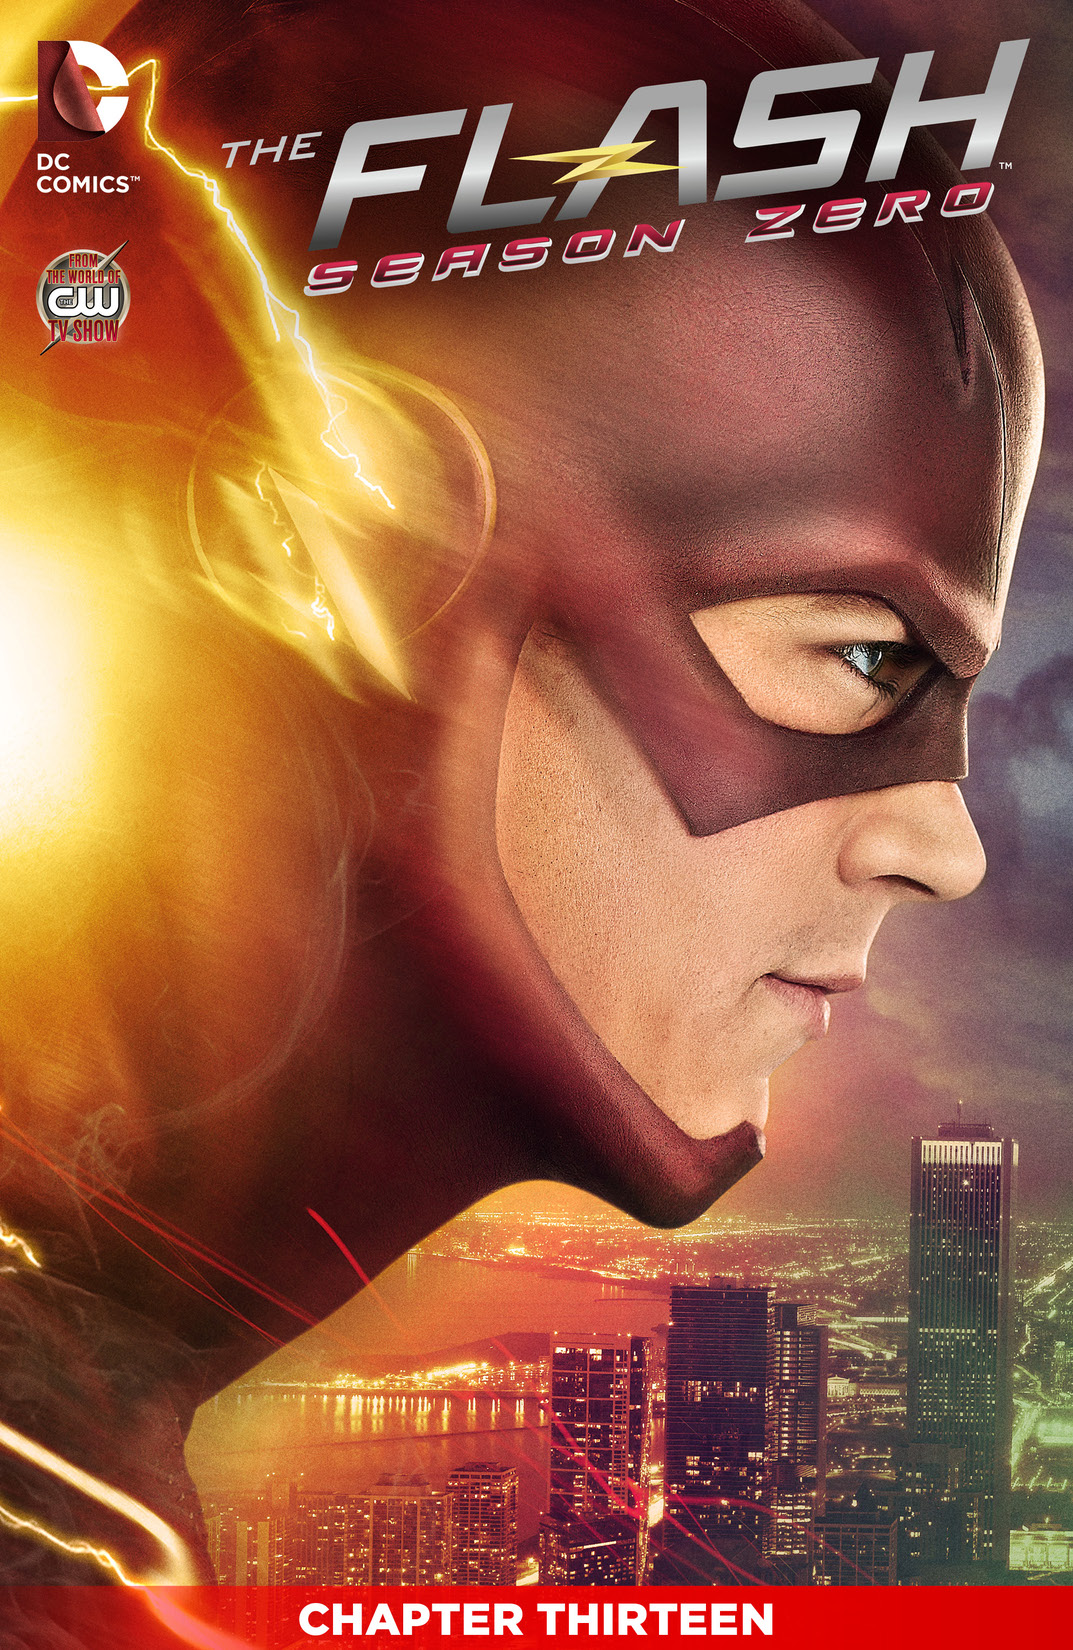 The Flash: Season Zero #13 preview images